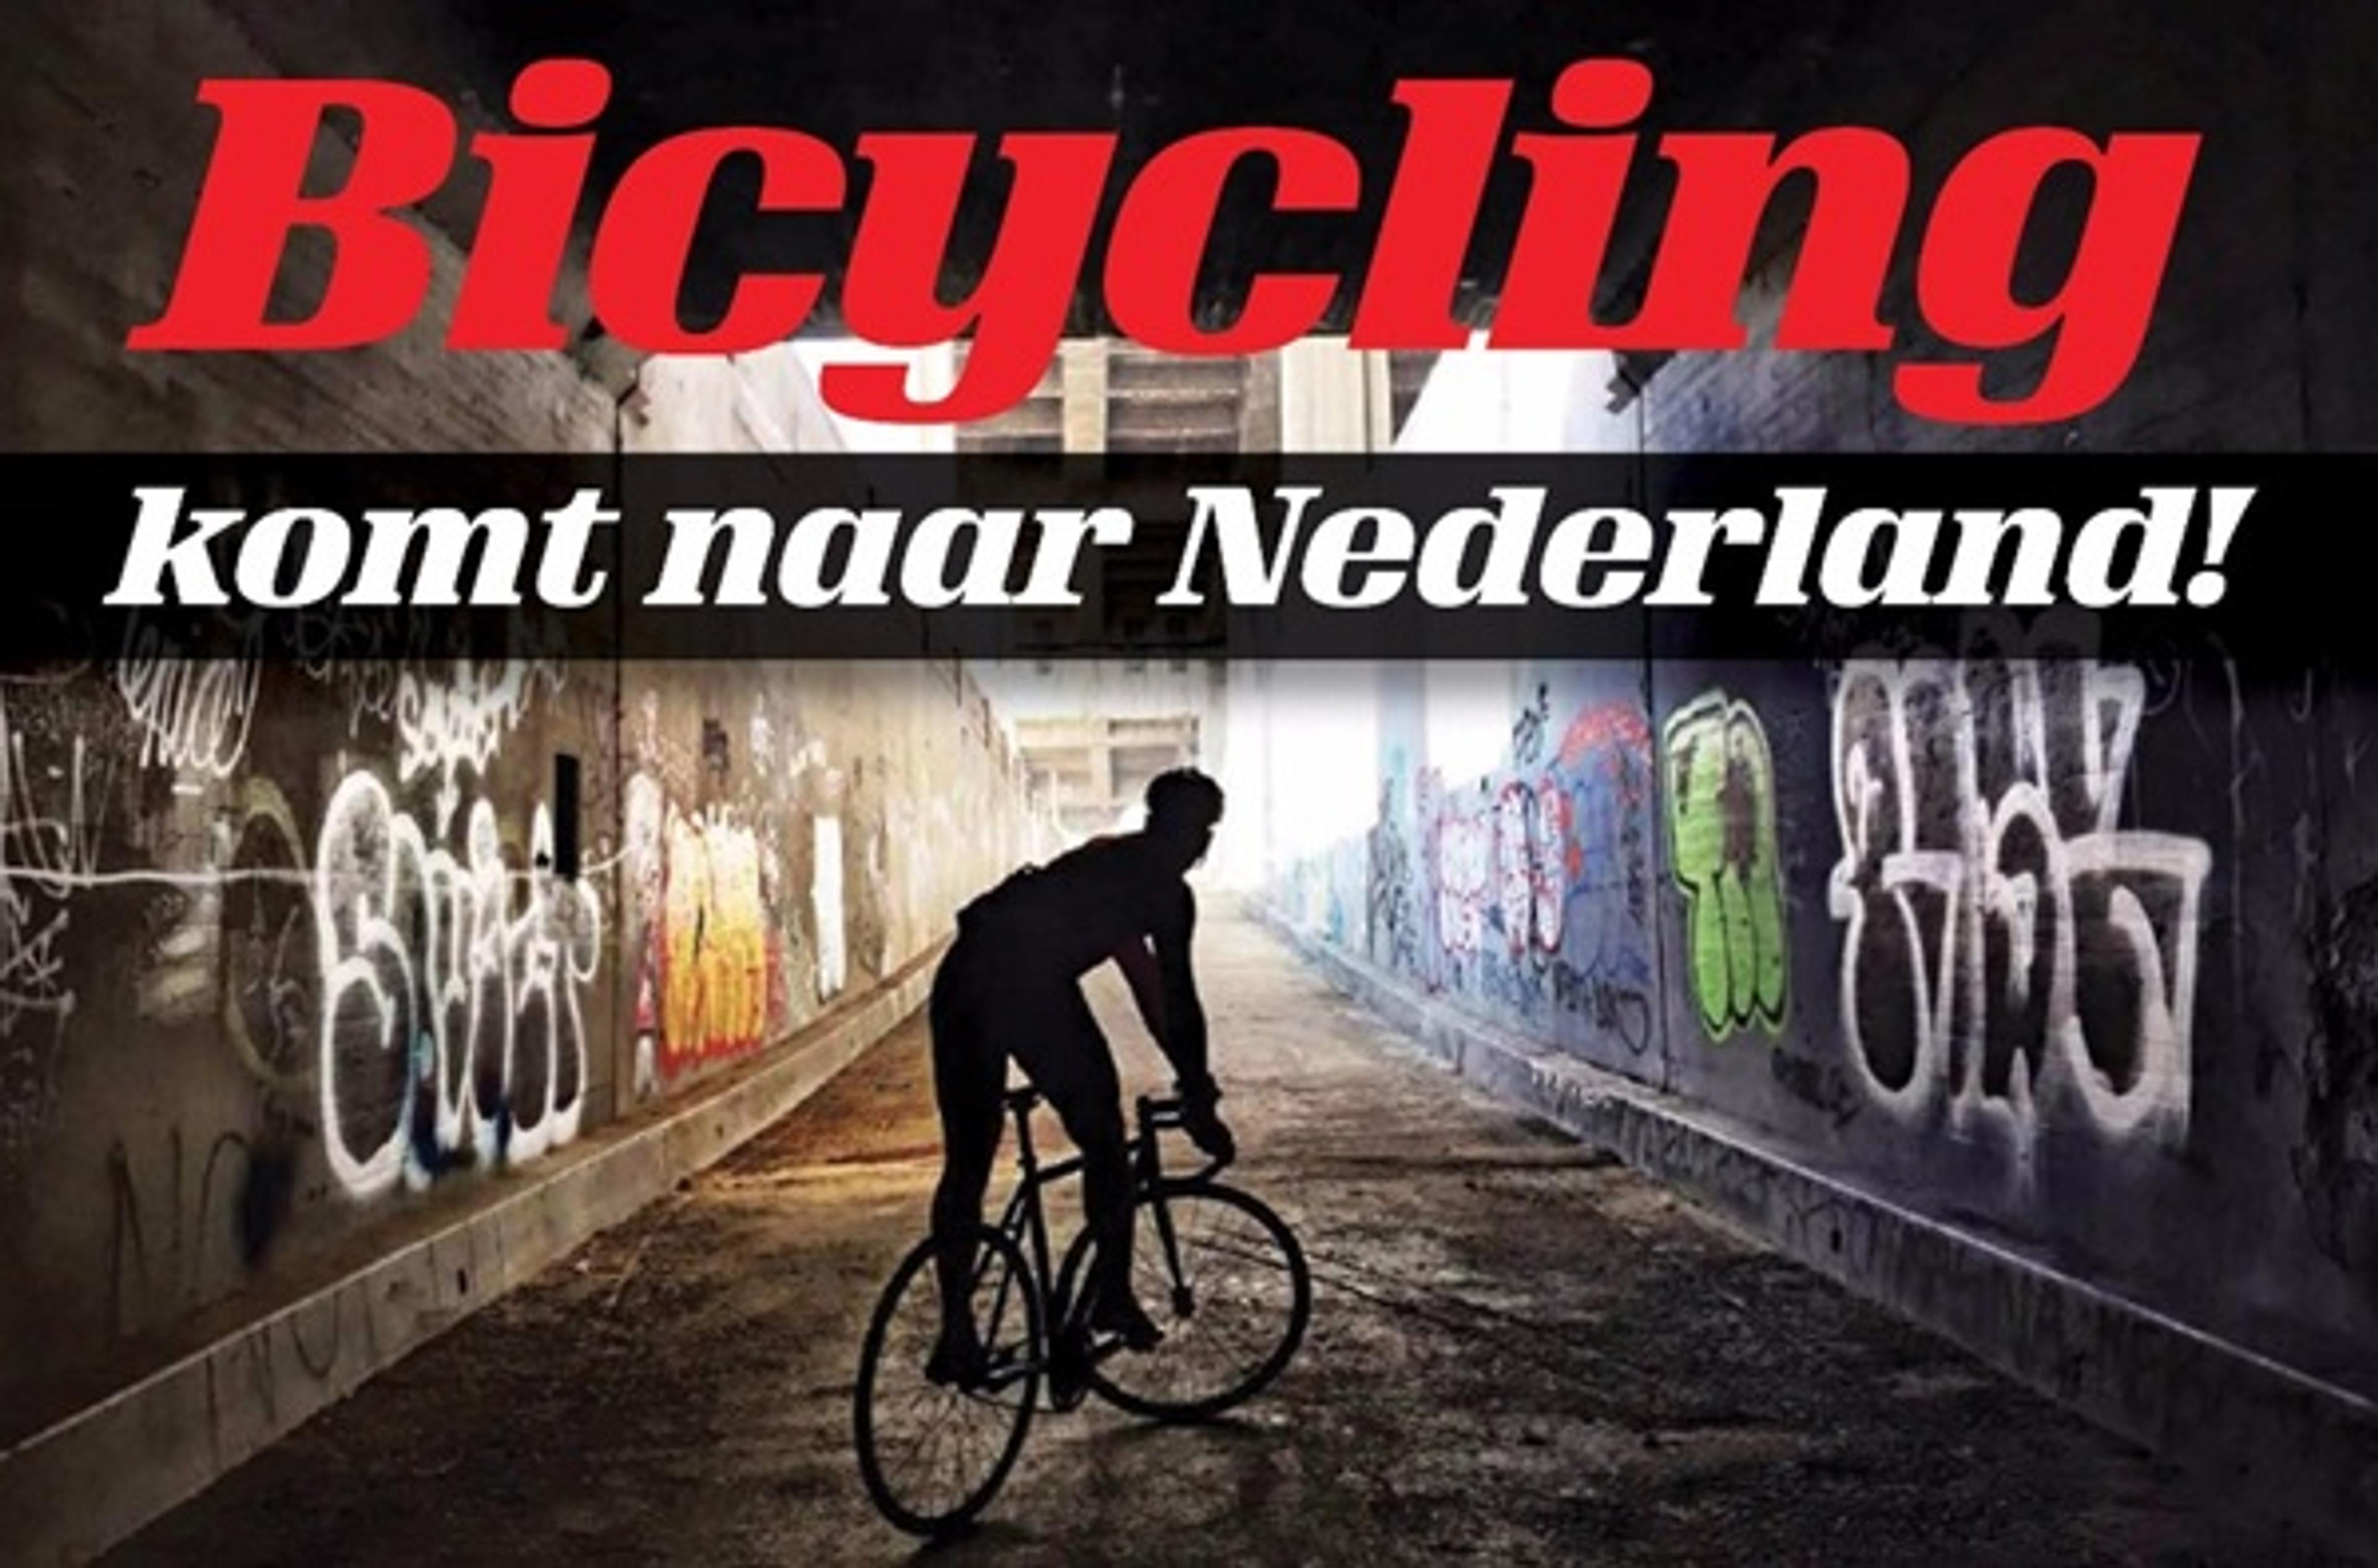 Magazine Bicycling komt naar Nederland